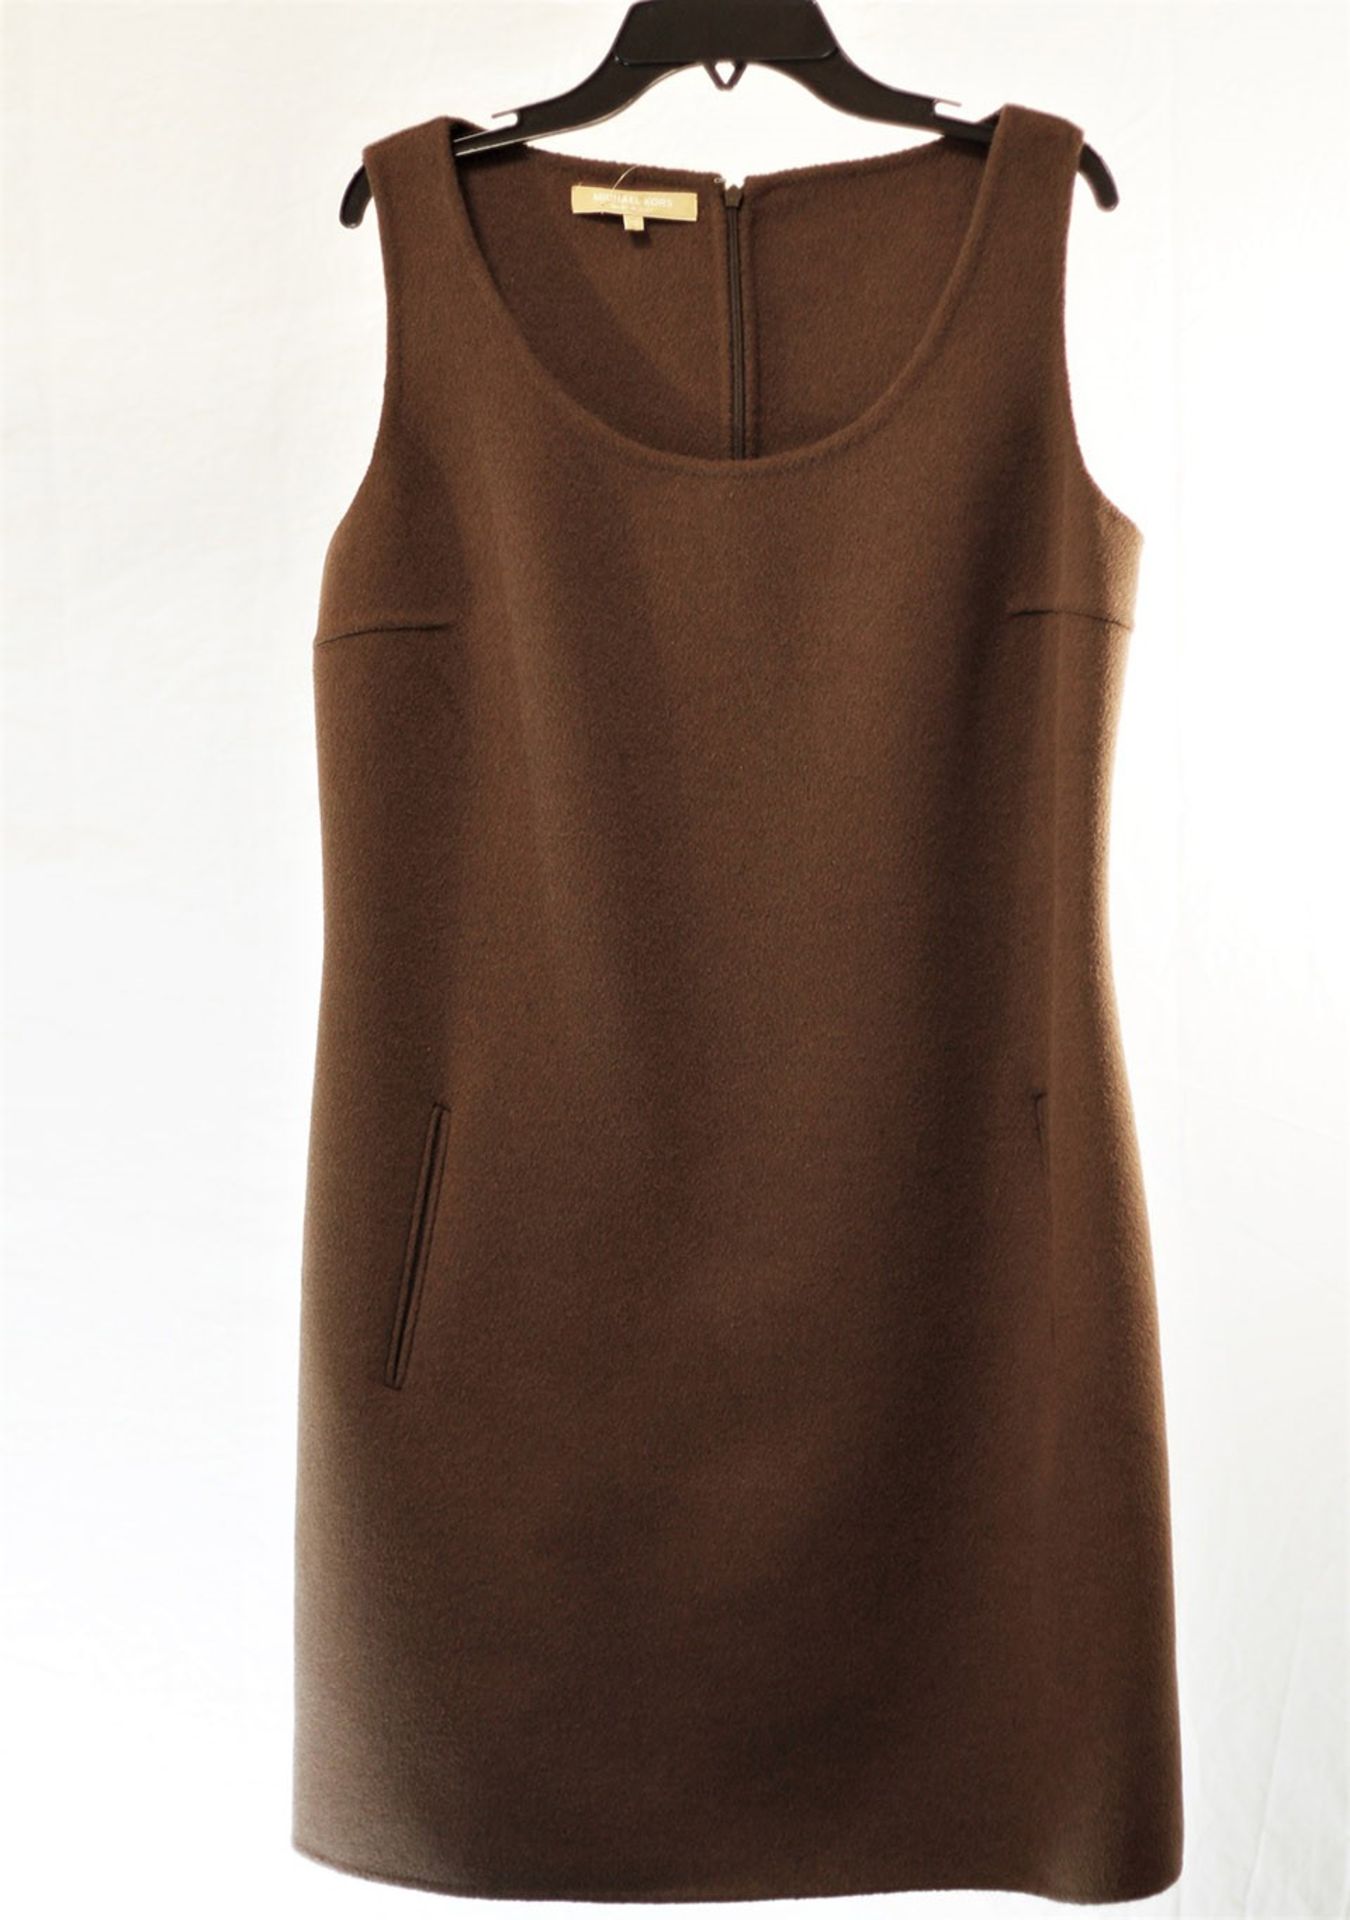 1 x Michael Kors Brown Dress - Size: 10 - Material: 55% Virgin Wool, 40% Angora, 5% Cashgora -